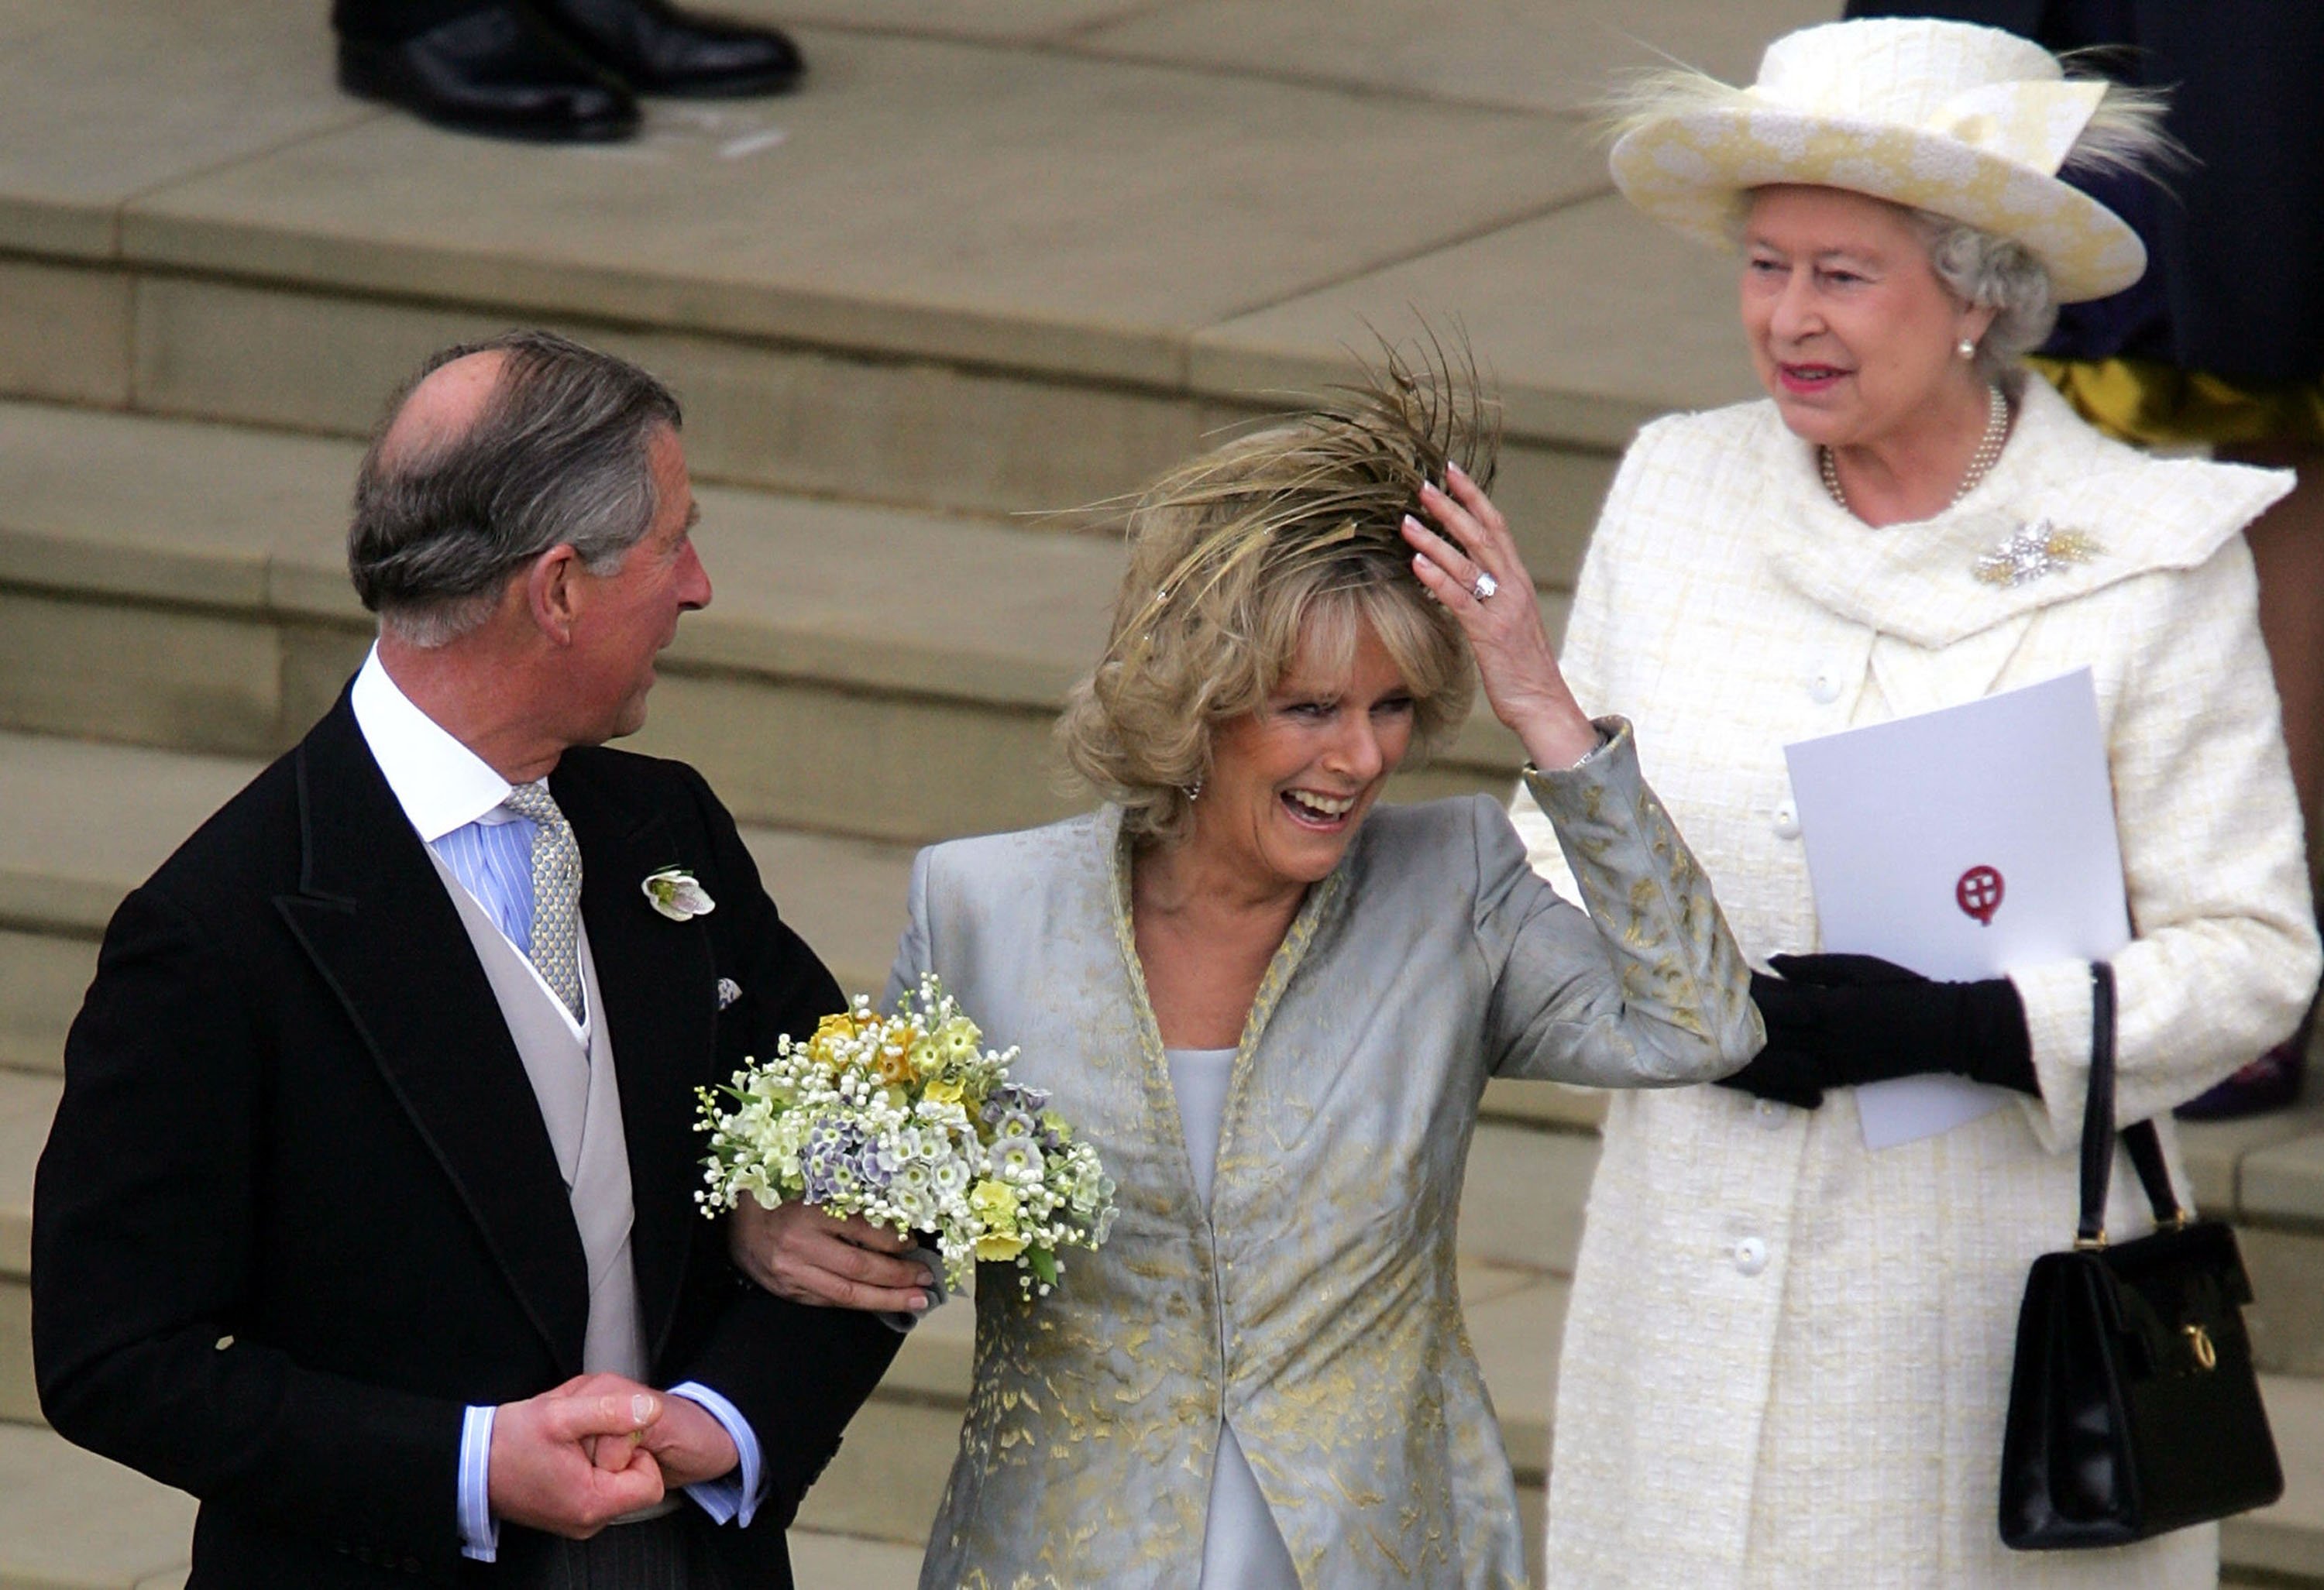 Prince Charles, Camilla Parker Bowles, and Queen Elizabeth II